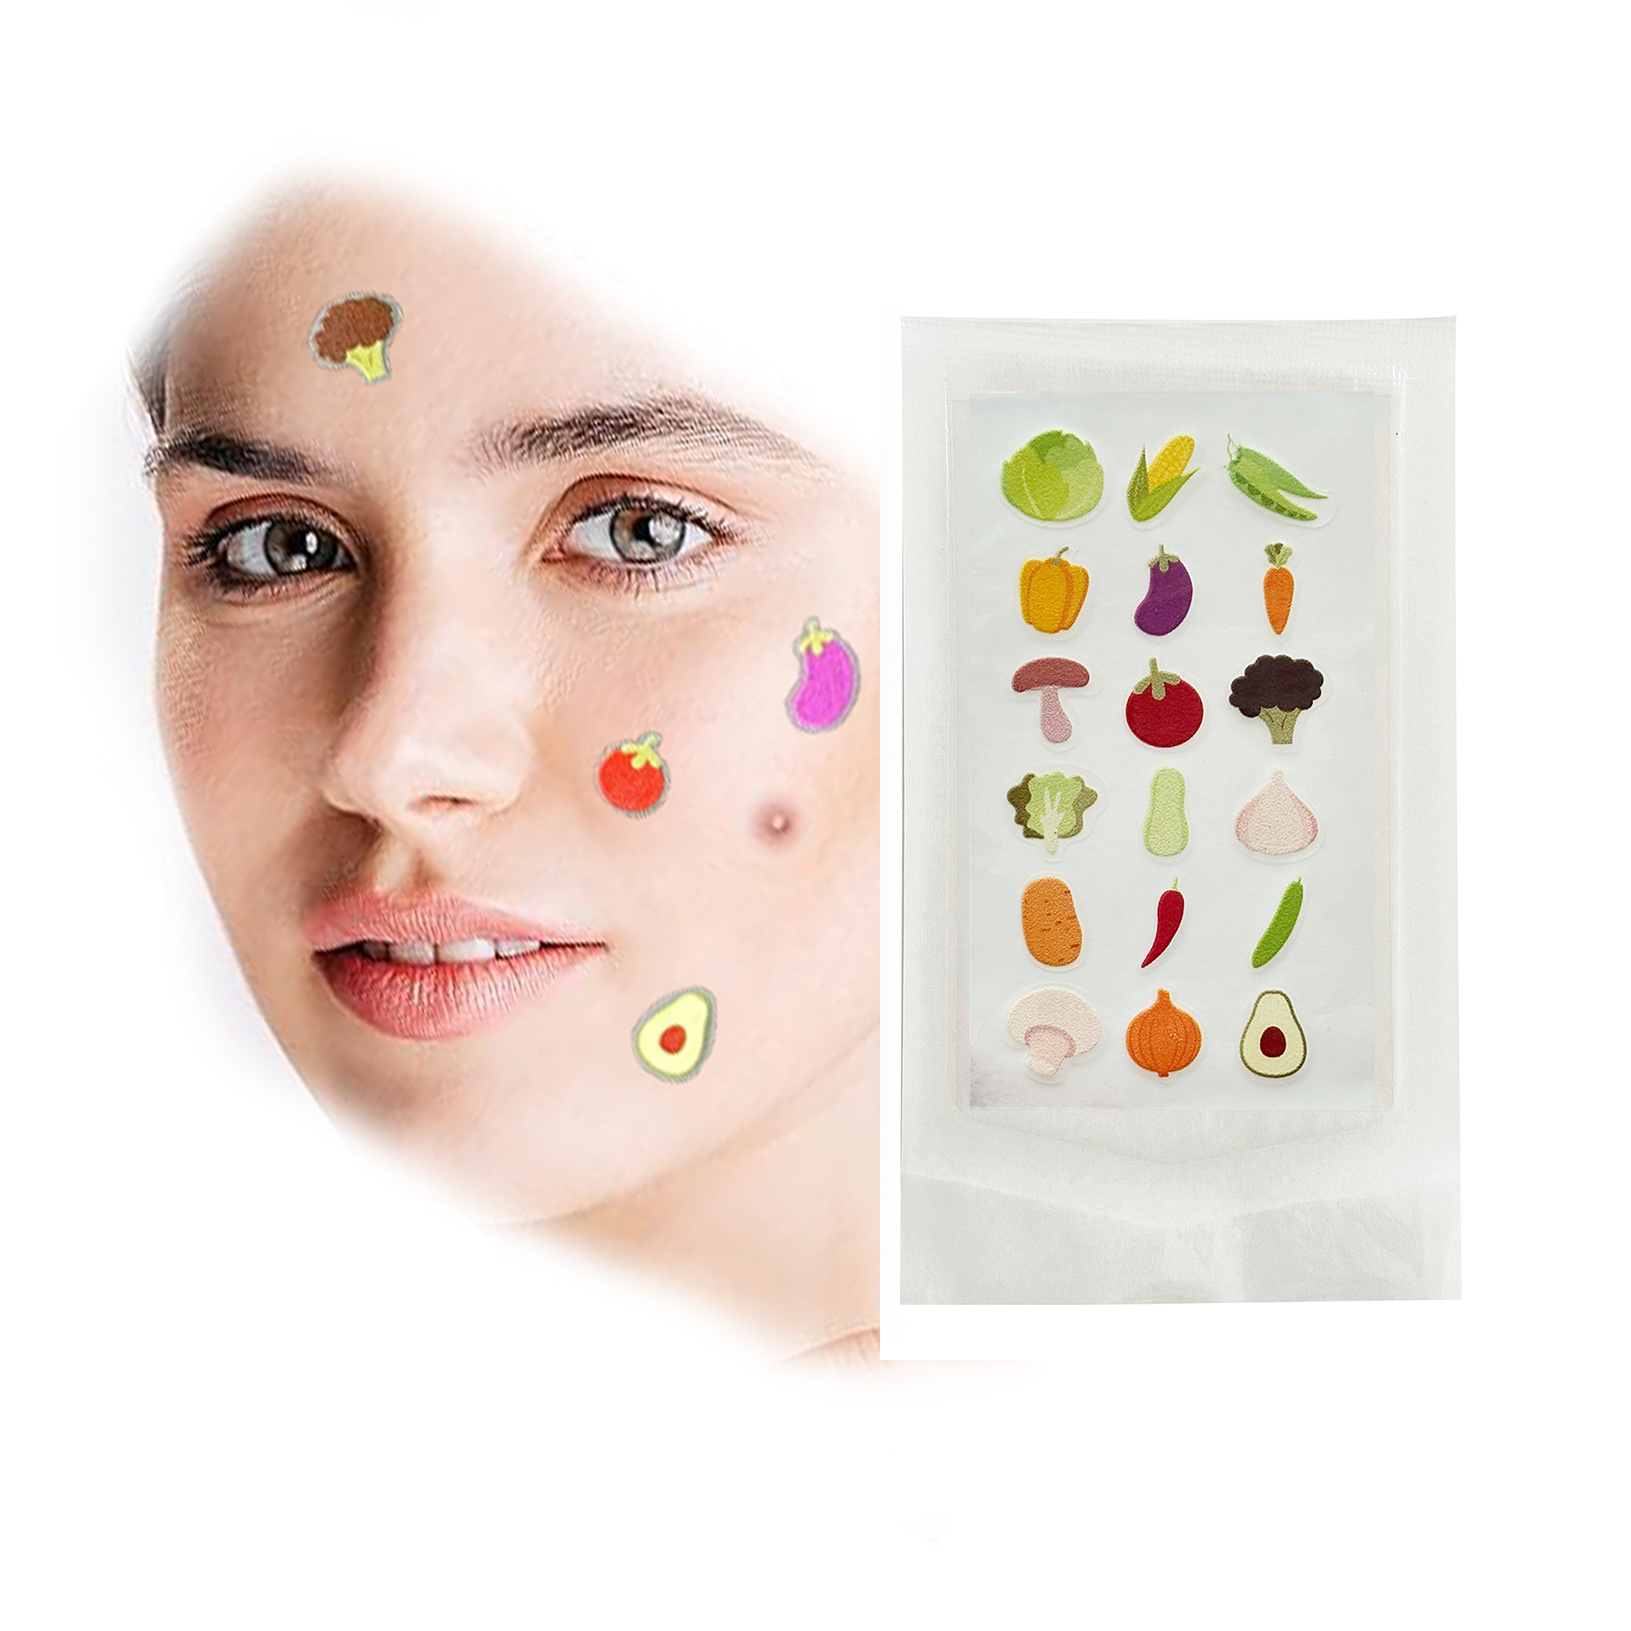 18 dots acne pimple patch,multiple colors printing